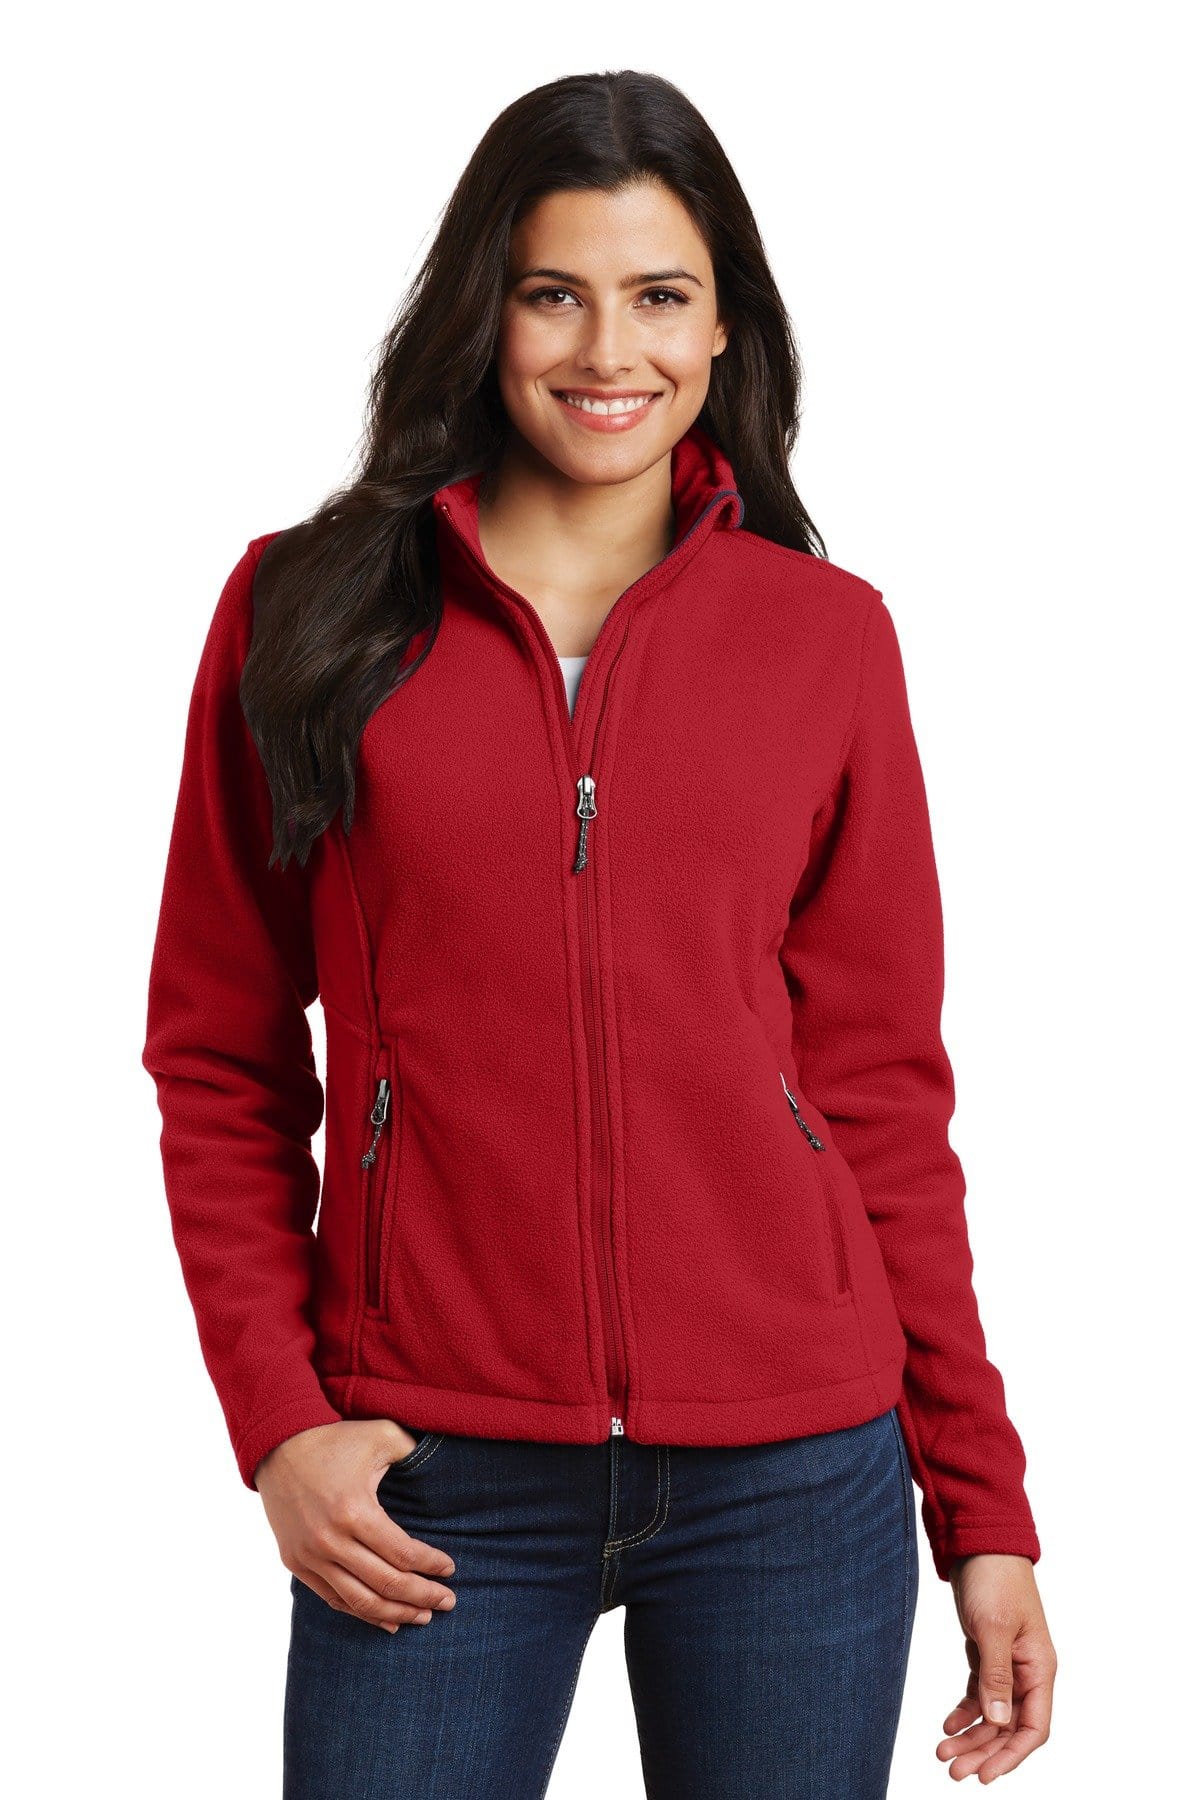 Port Authority Jackets For Women - Fleece Jacket L217203